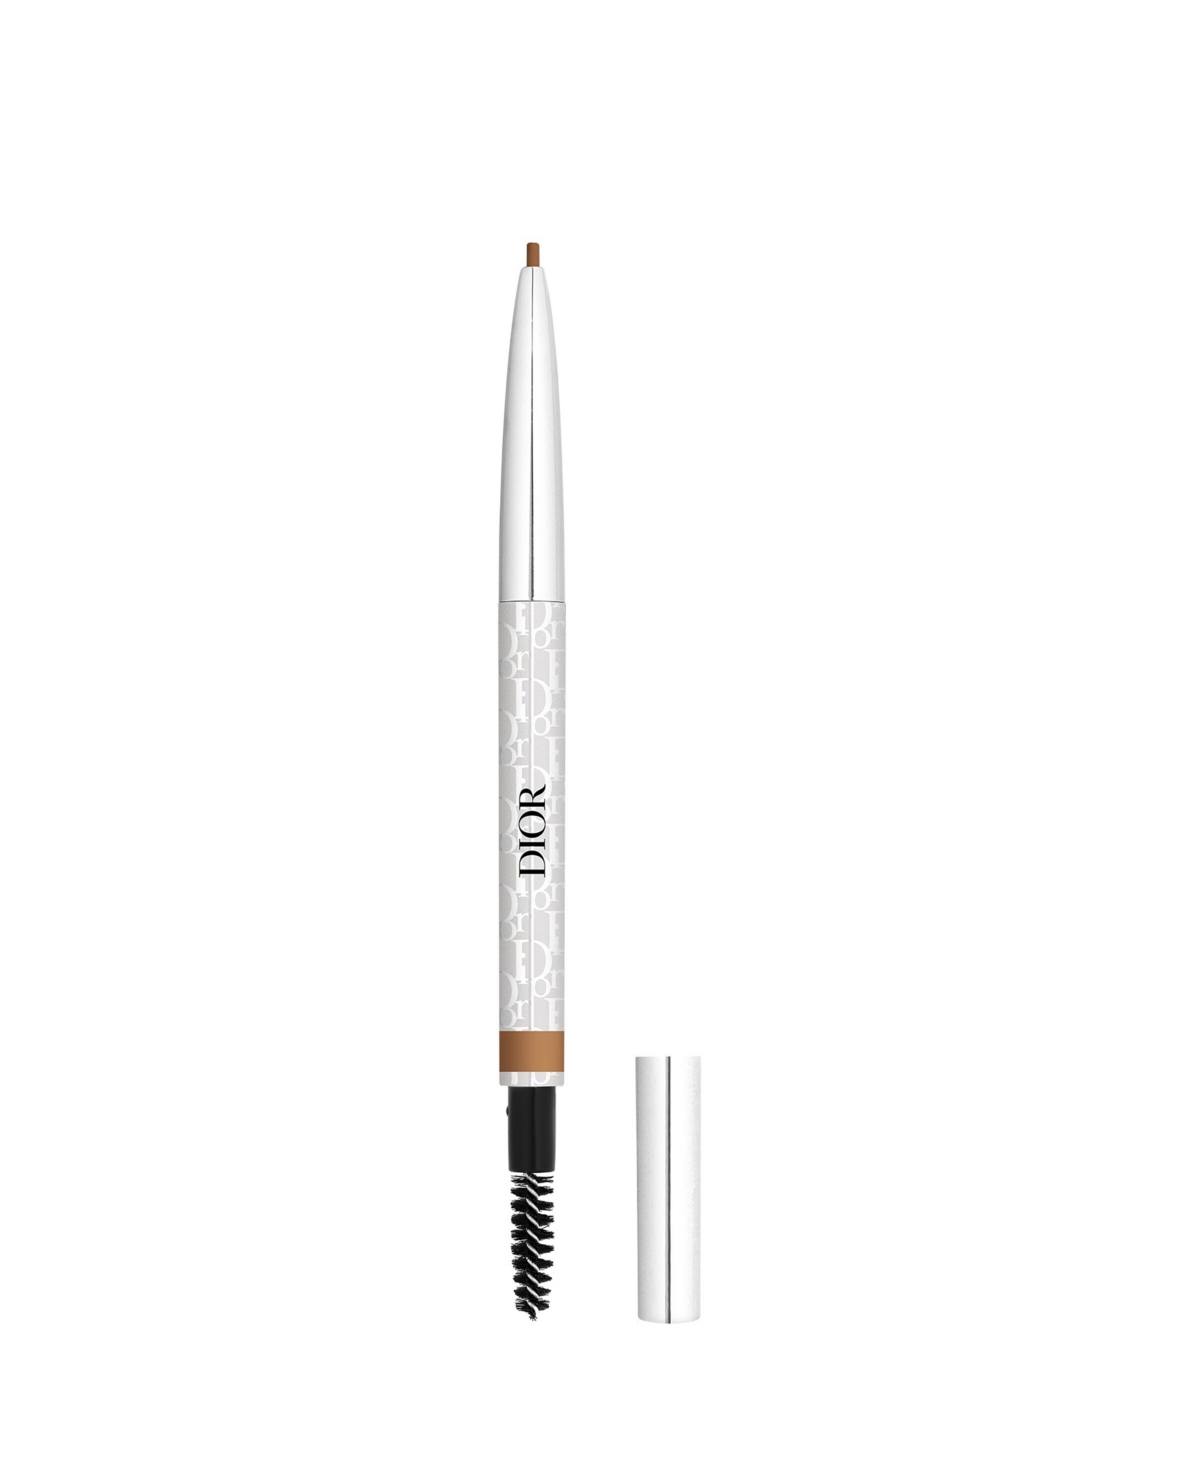 Dior Show Brow Styler Eyebrow Pencil In Chestnut